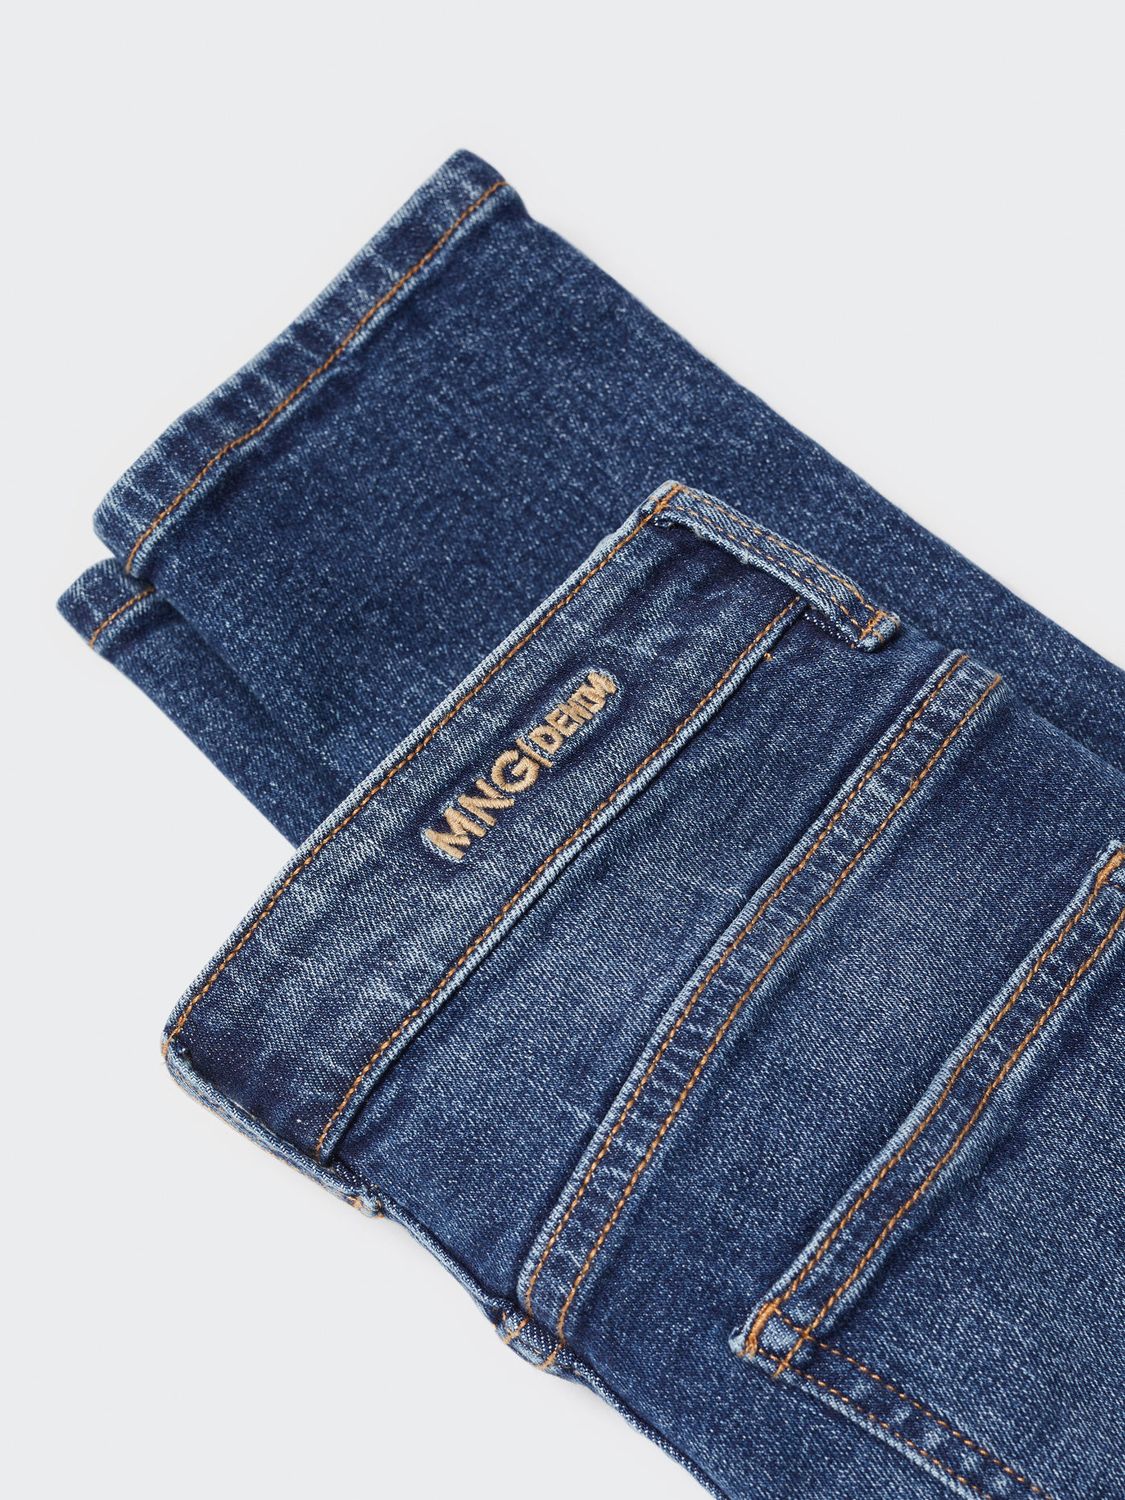 Mango Kids' Slim Fit Cropped Jeans, Open Blue, 6 years